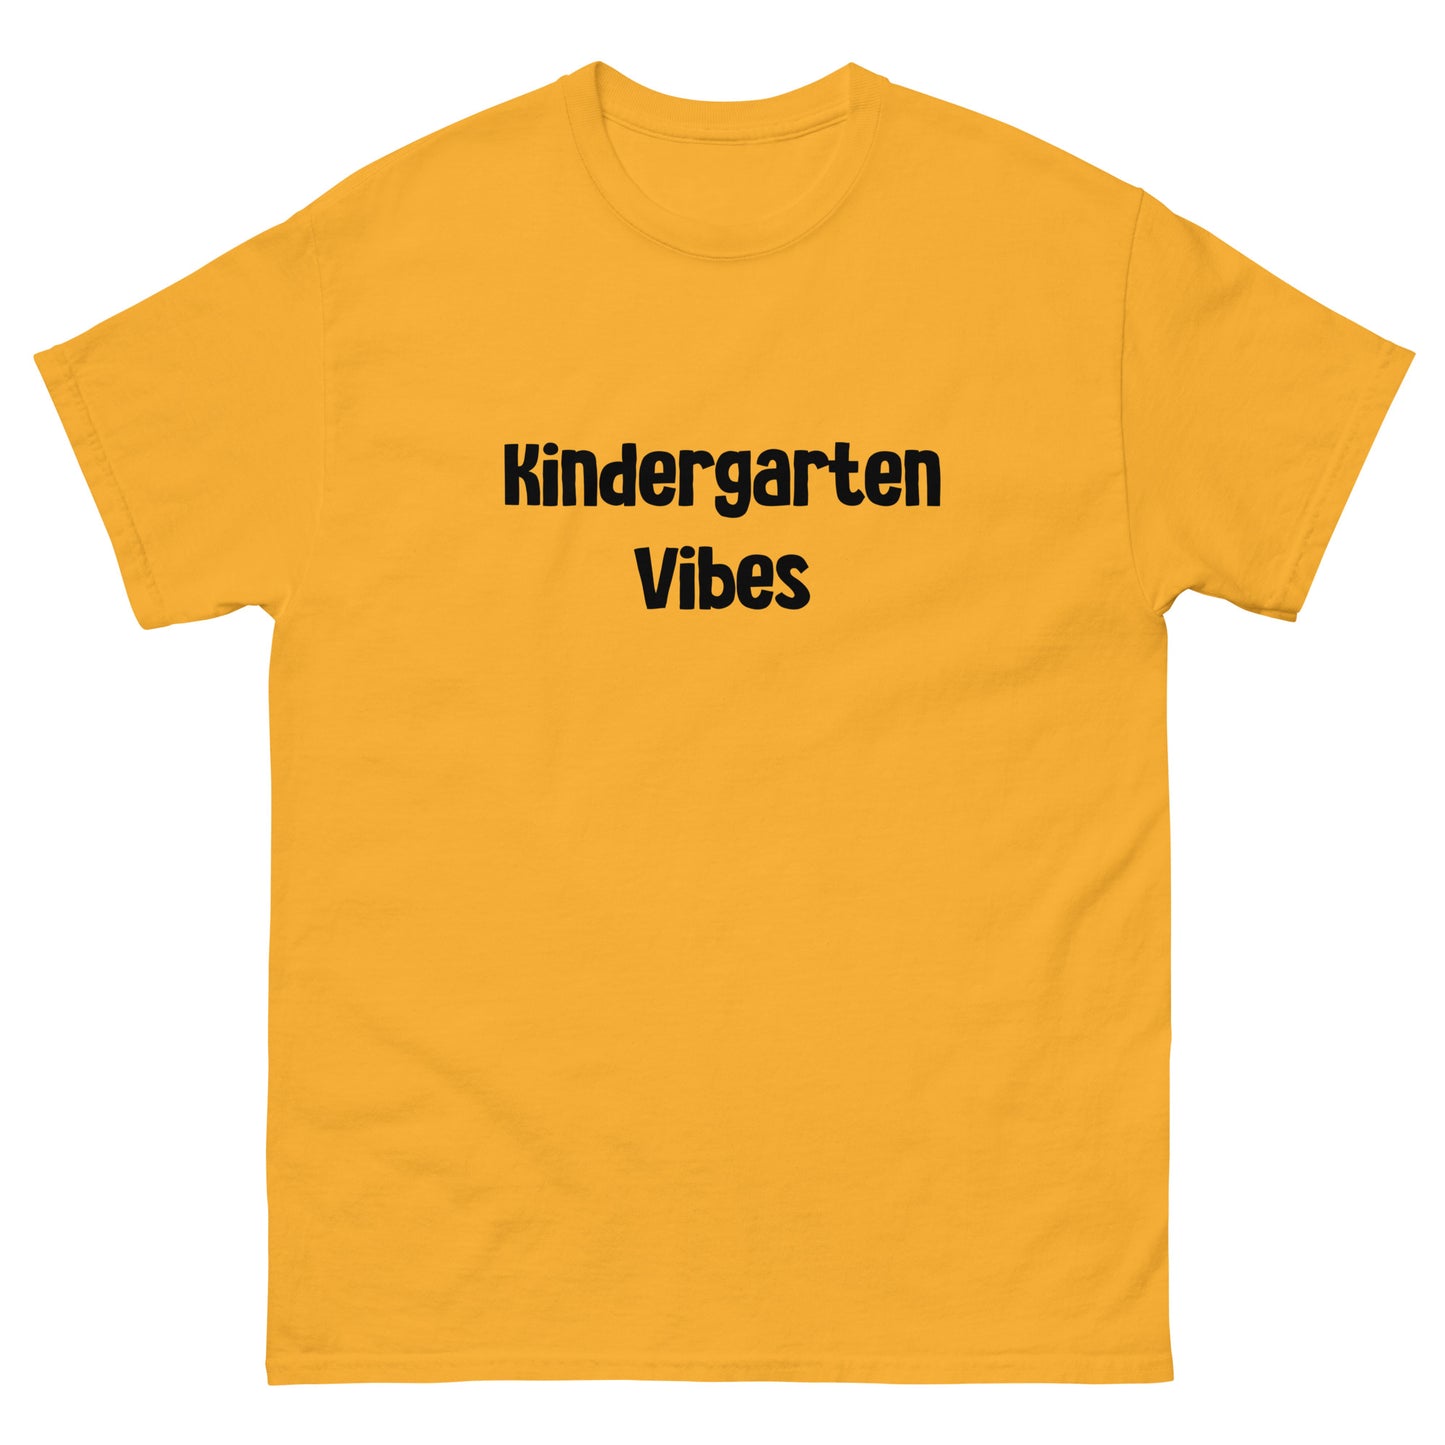 Adult's Kindergarten Vibes T Shirts